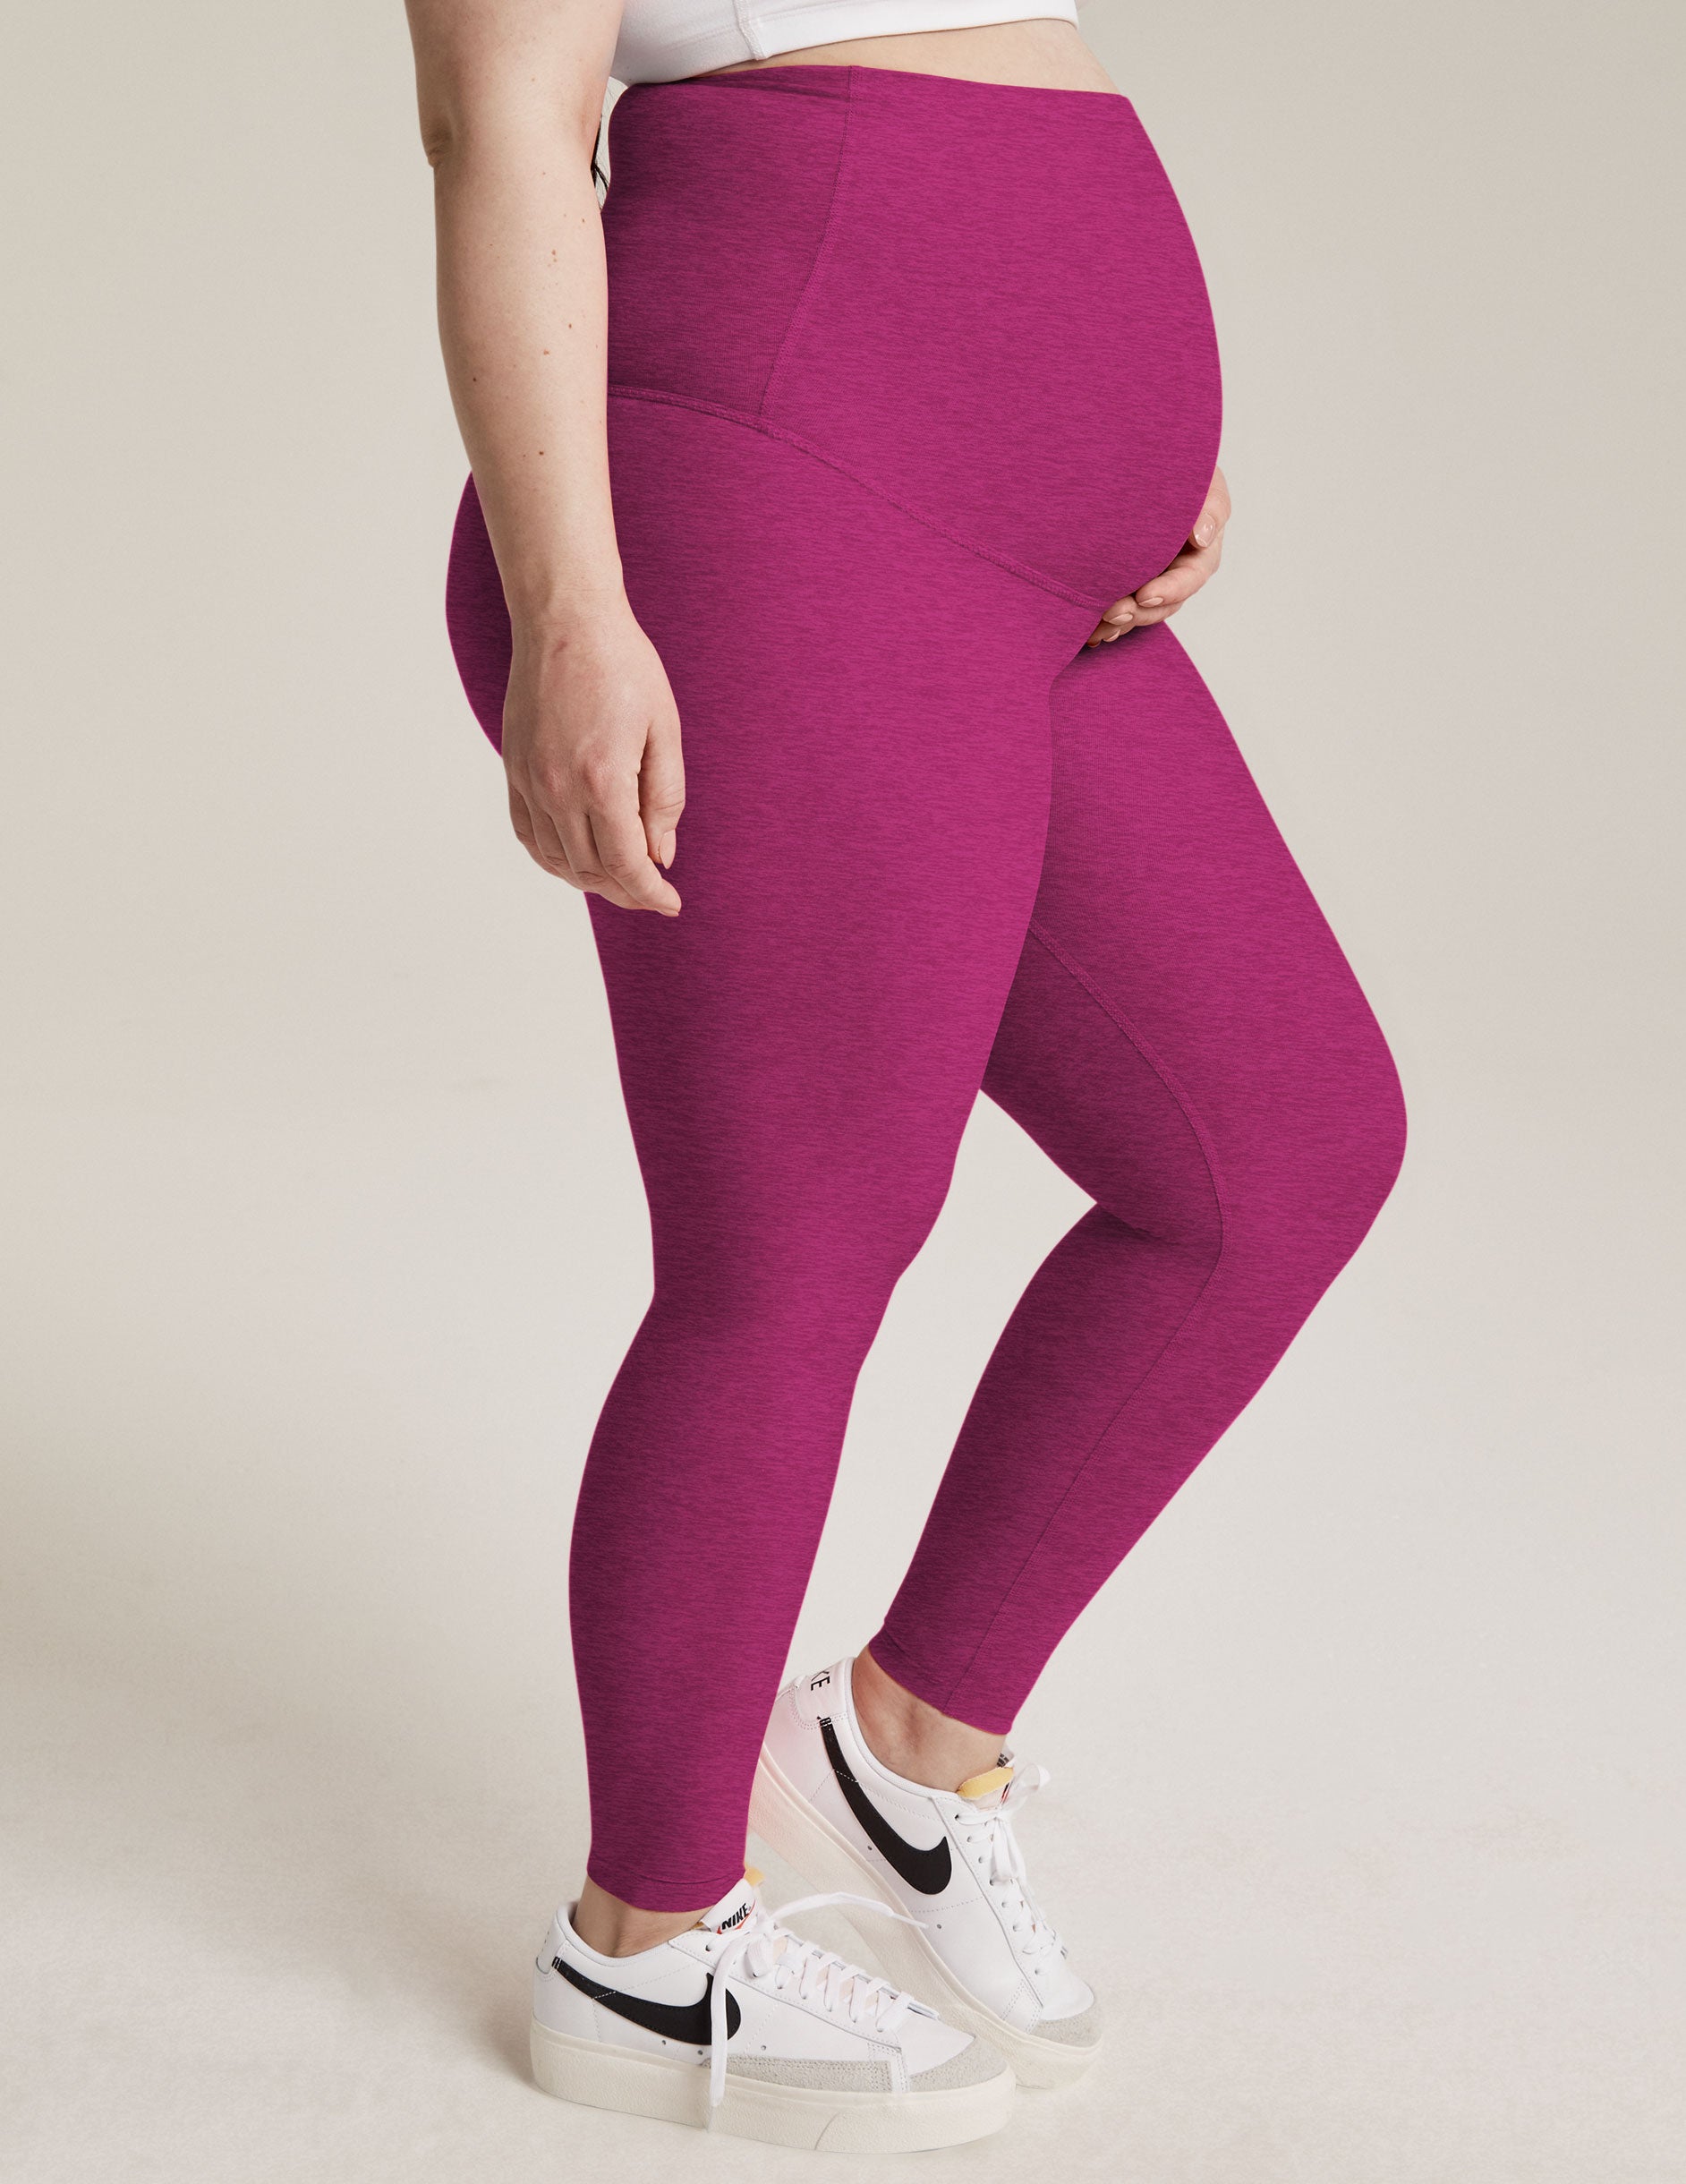 Beyond the Bump Maternity Full Length Leggings